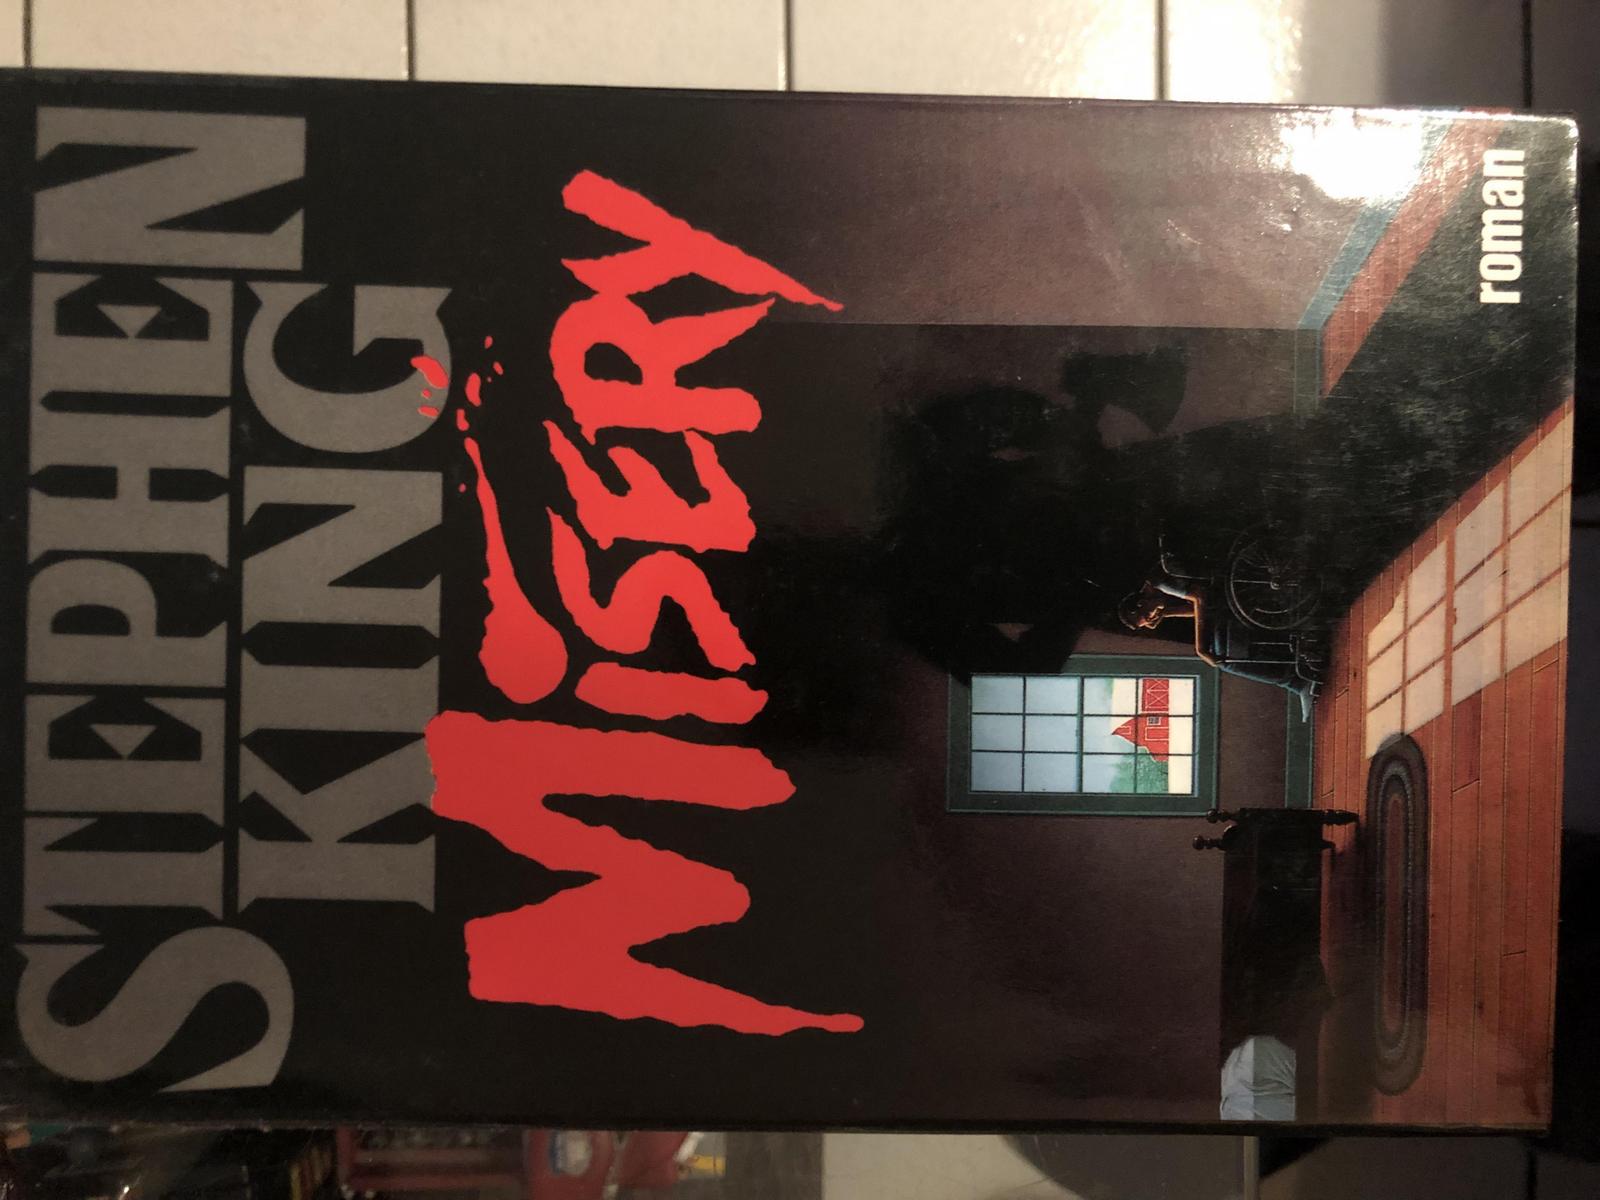 Stephen King: Misery (French language, 1989)